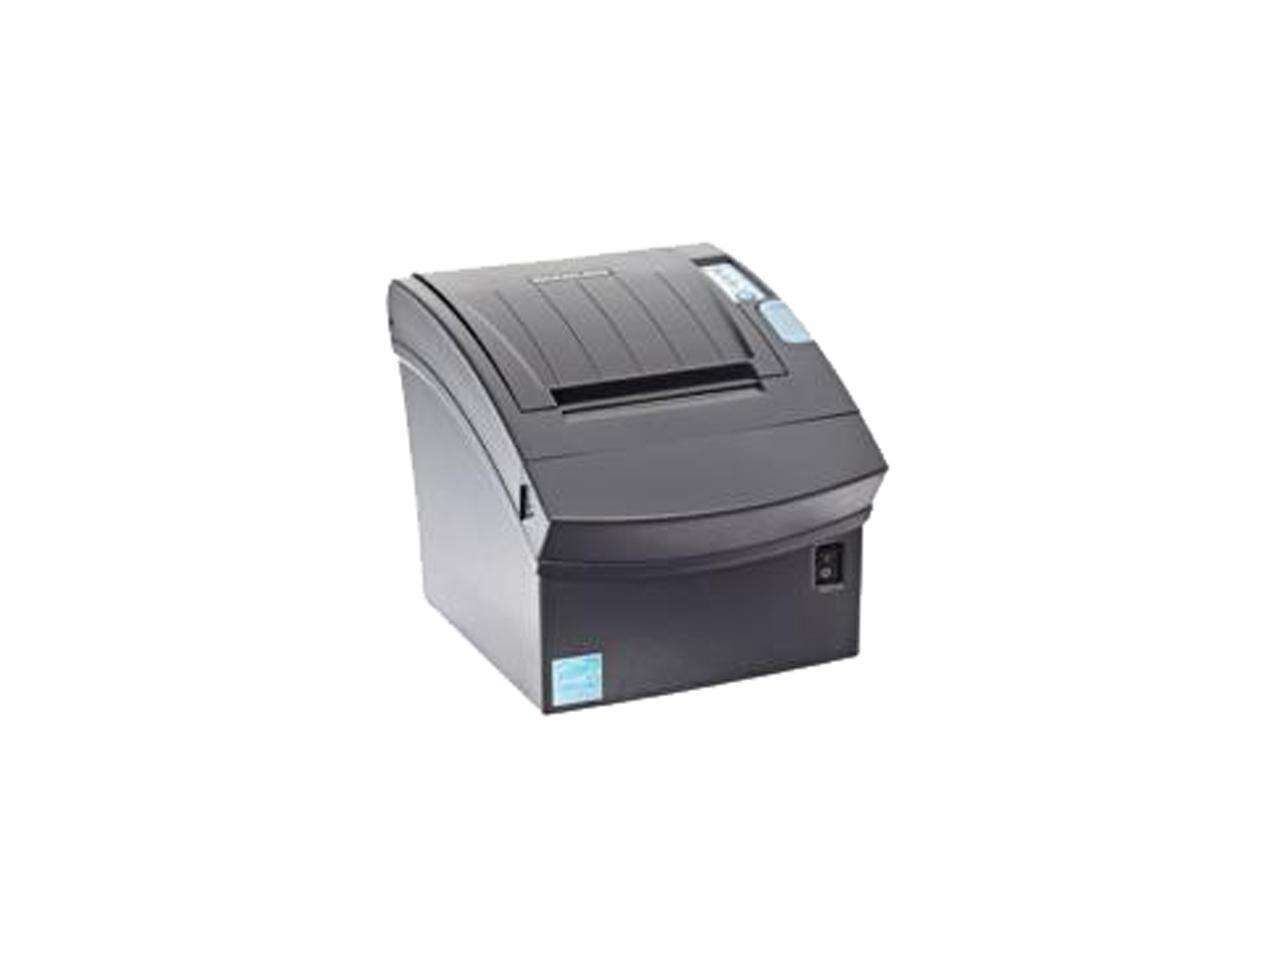 Bixolon SRP-350II 3” Direct Thermal Receipt Printer, USB, Serial Interface Card, Auto Cutter, Black - SRP-350IIICOSG